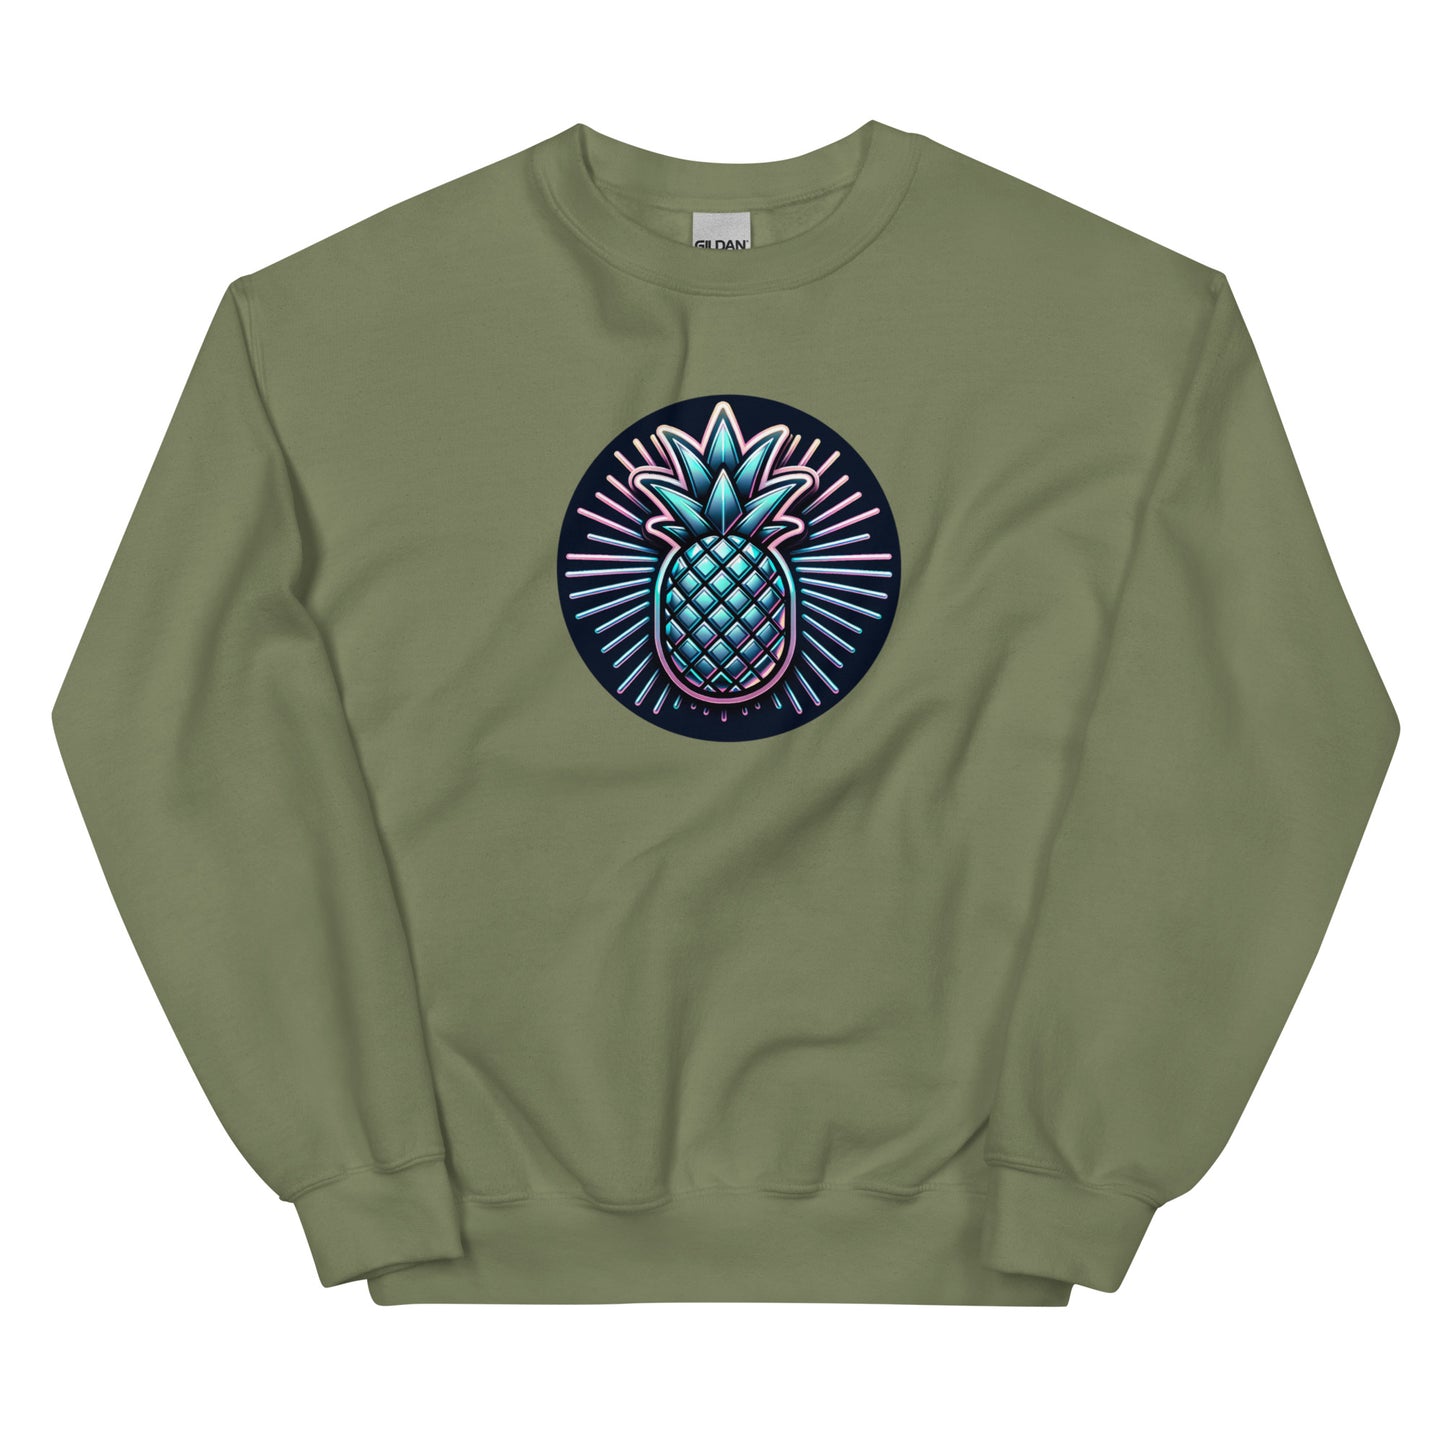 Shopijo’s Cool Graphic Pineapples Unisex Sweatshirt